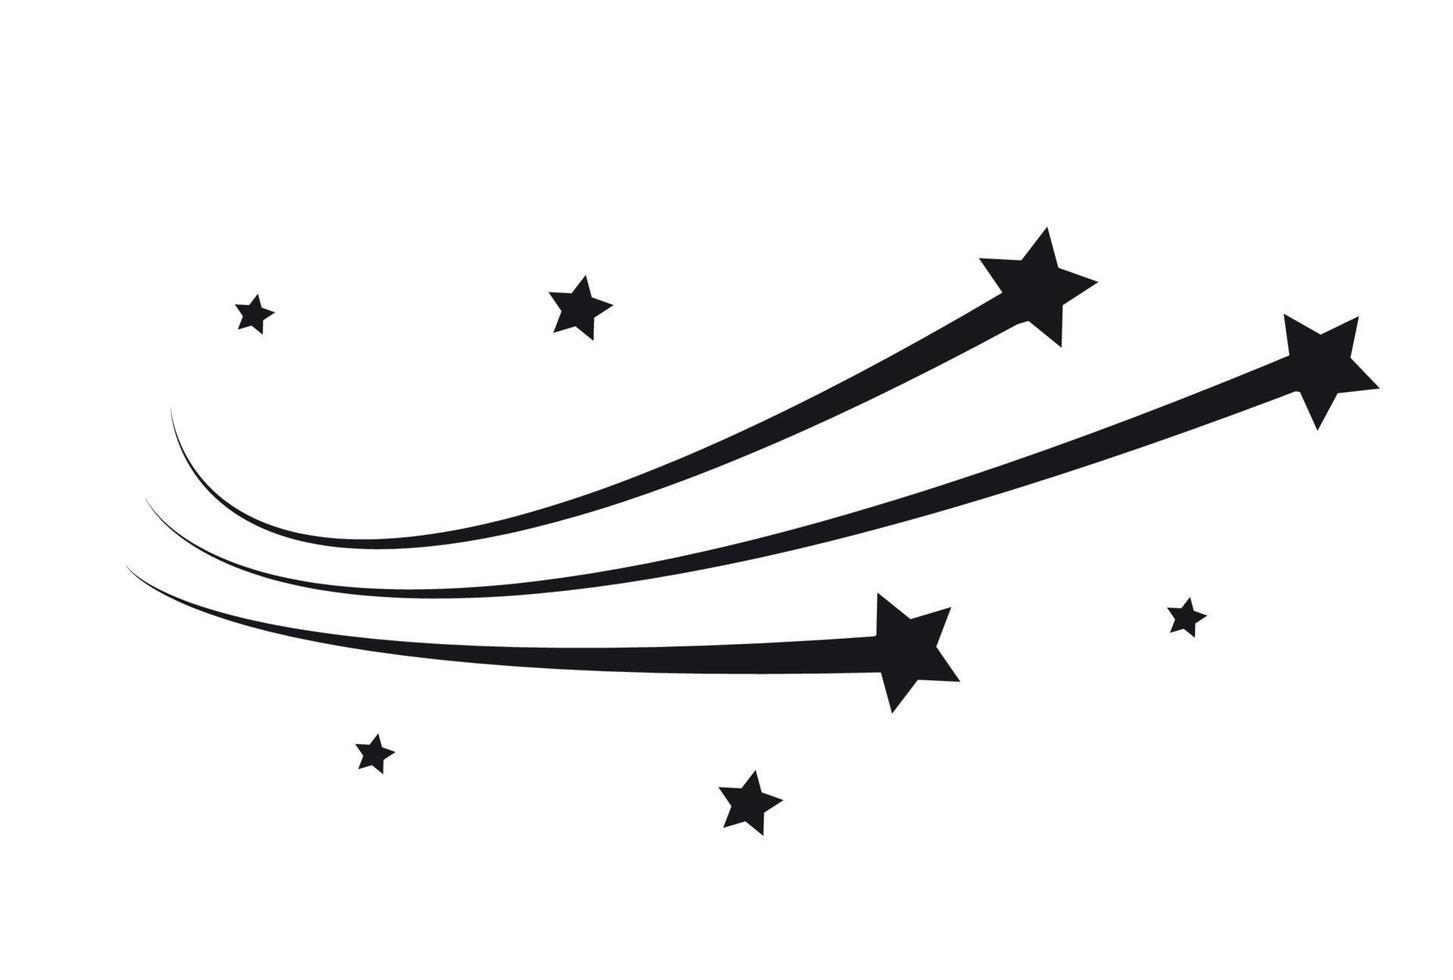 star trail komeet trace lijnen op witte achtergrond. vector illustratie